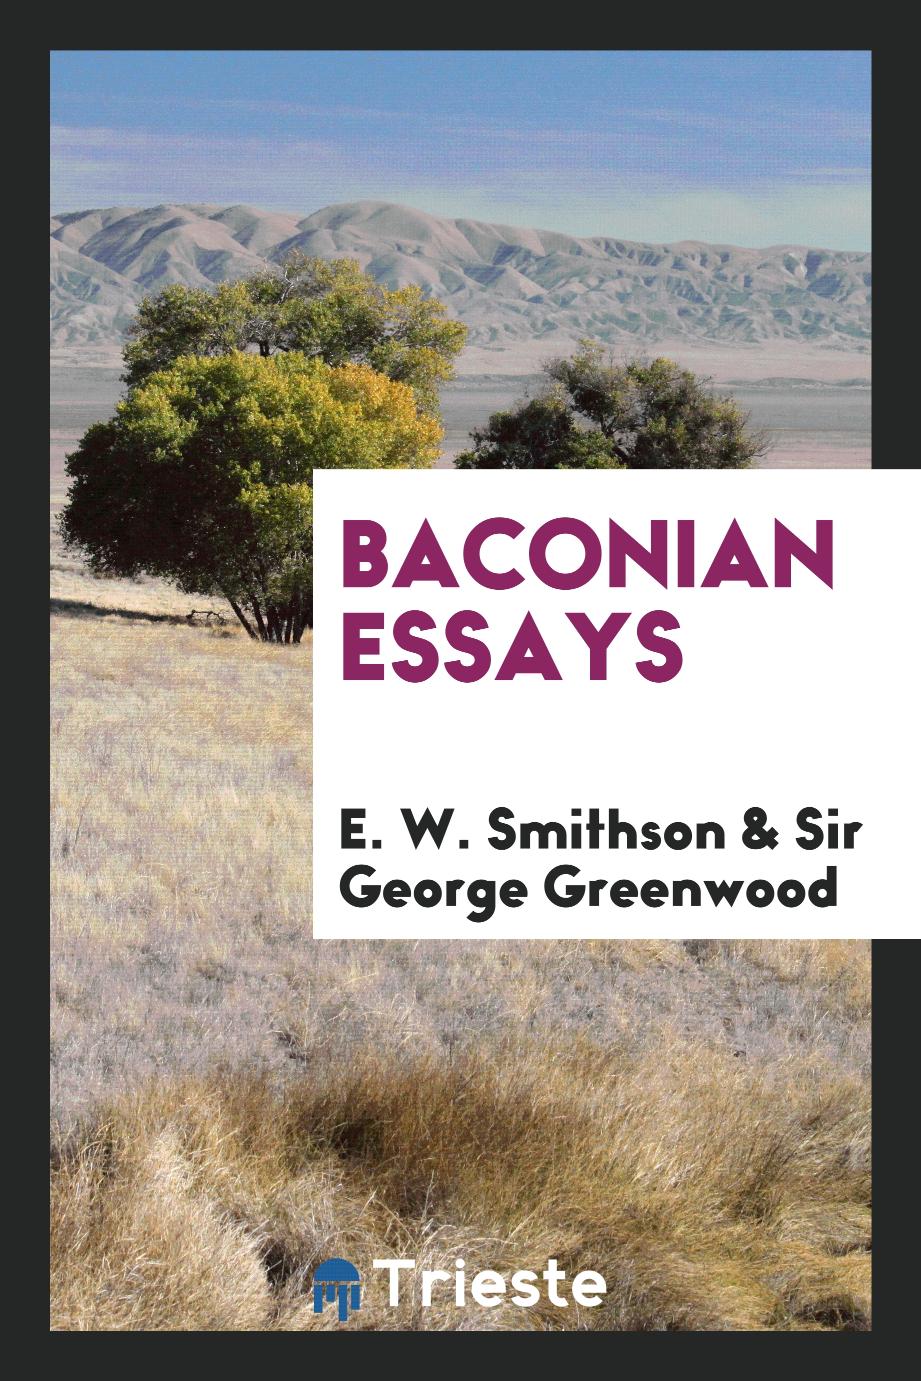 Baconian essays